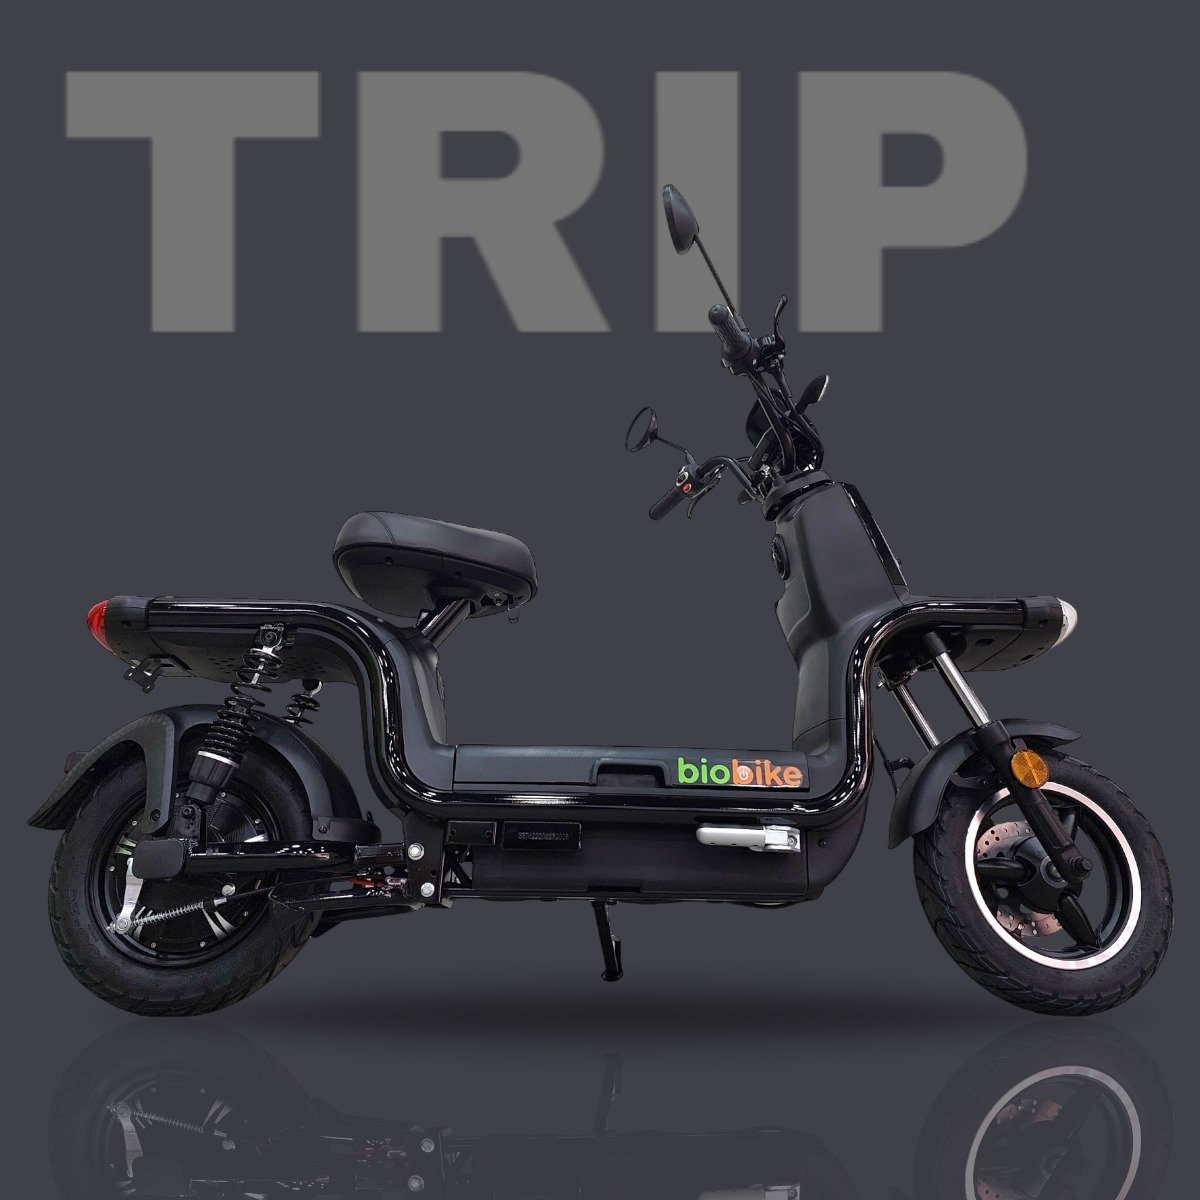 Autopropelido Elétrica Biobike® TRIP Aro 14"